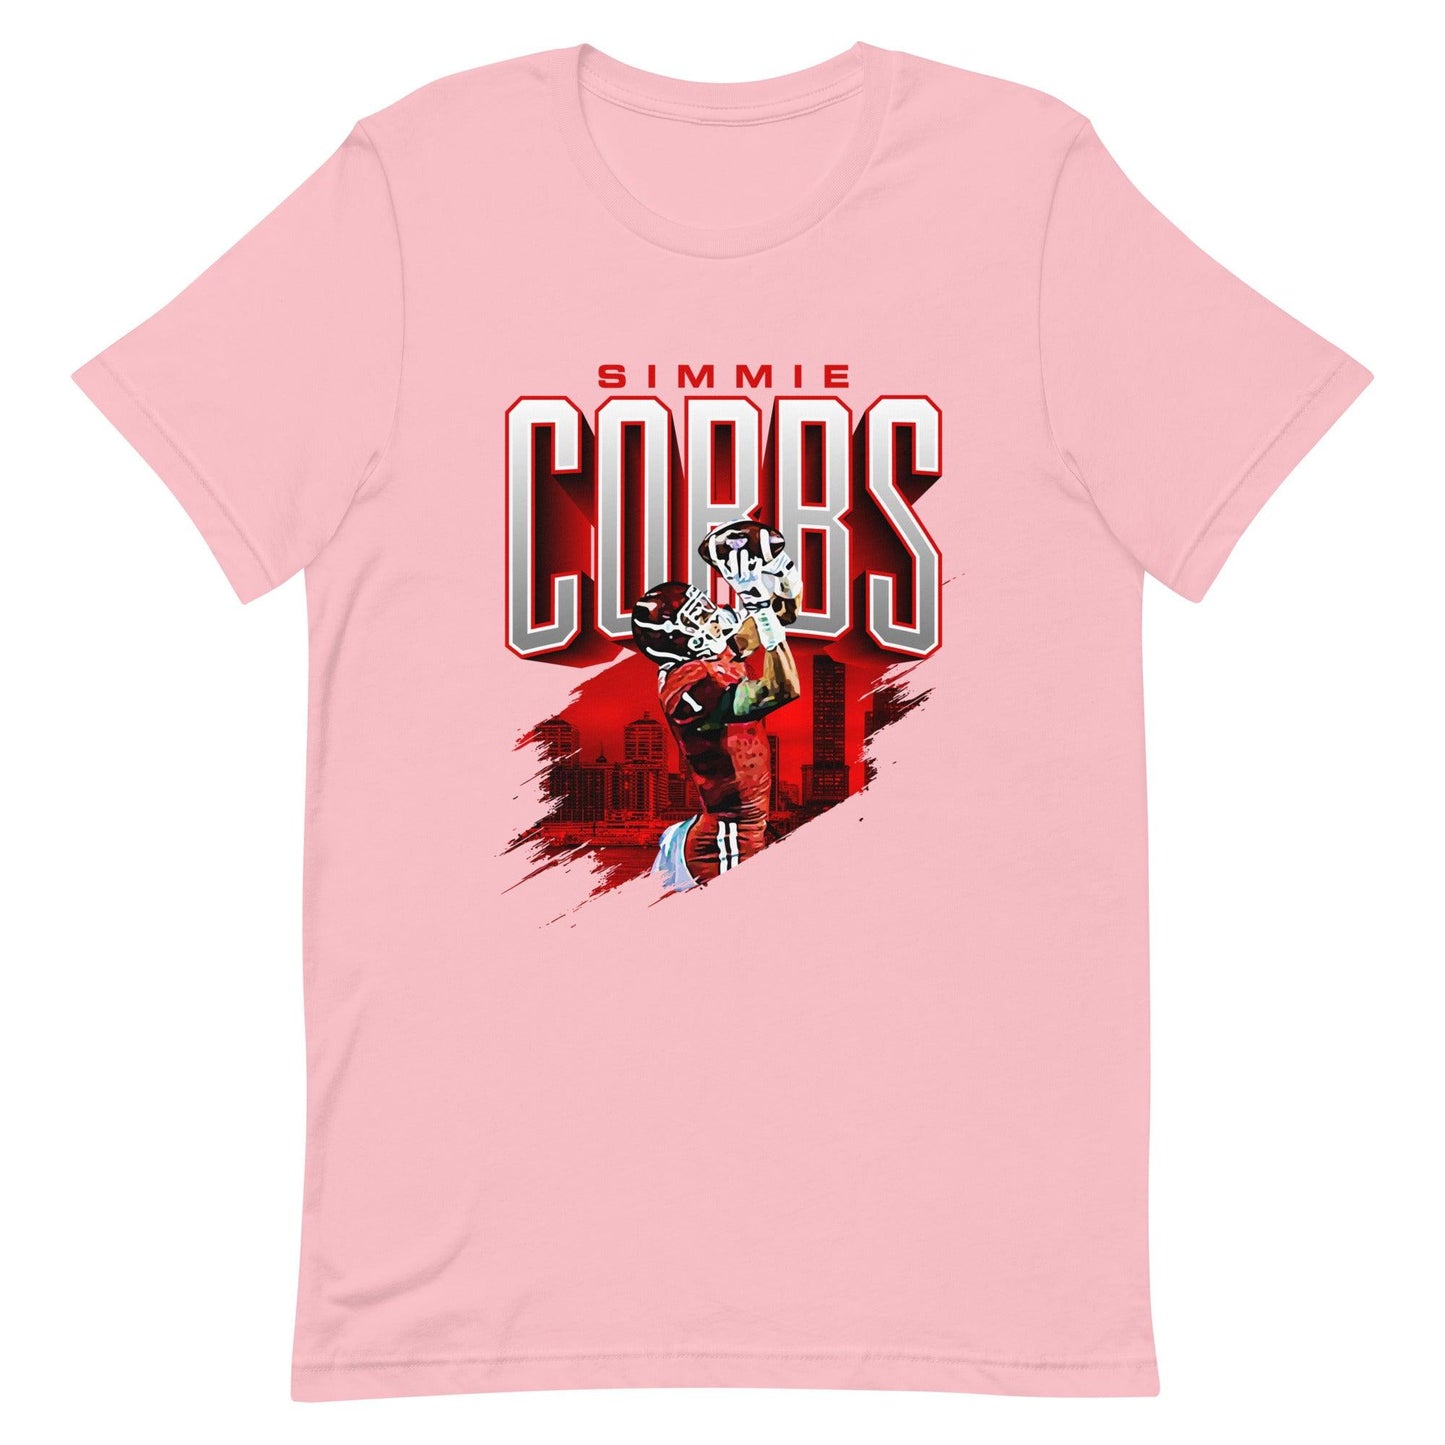 Simmie Cobbs "Gameday" t-shirt - Fan Arch